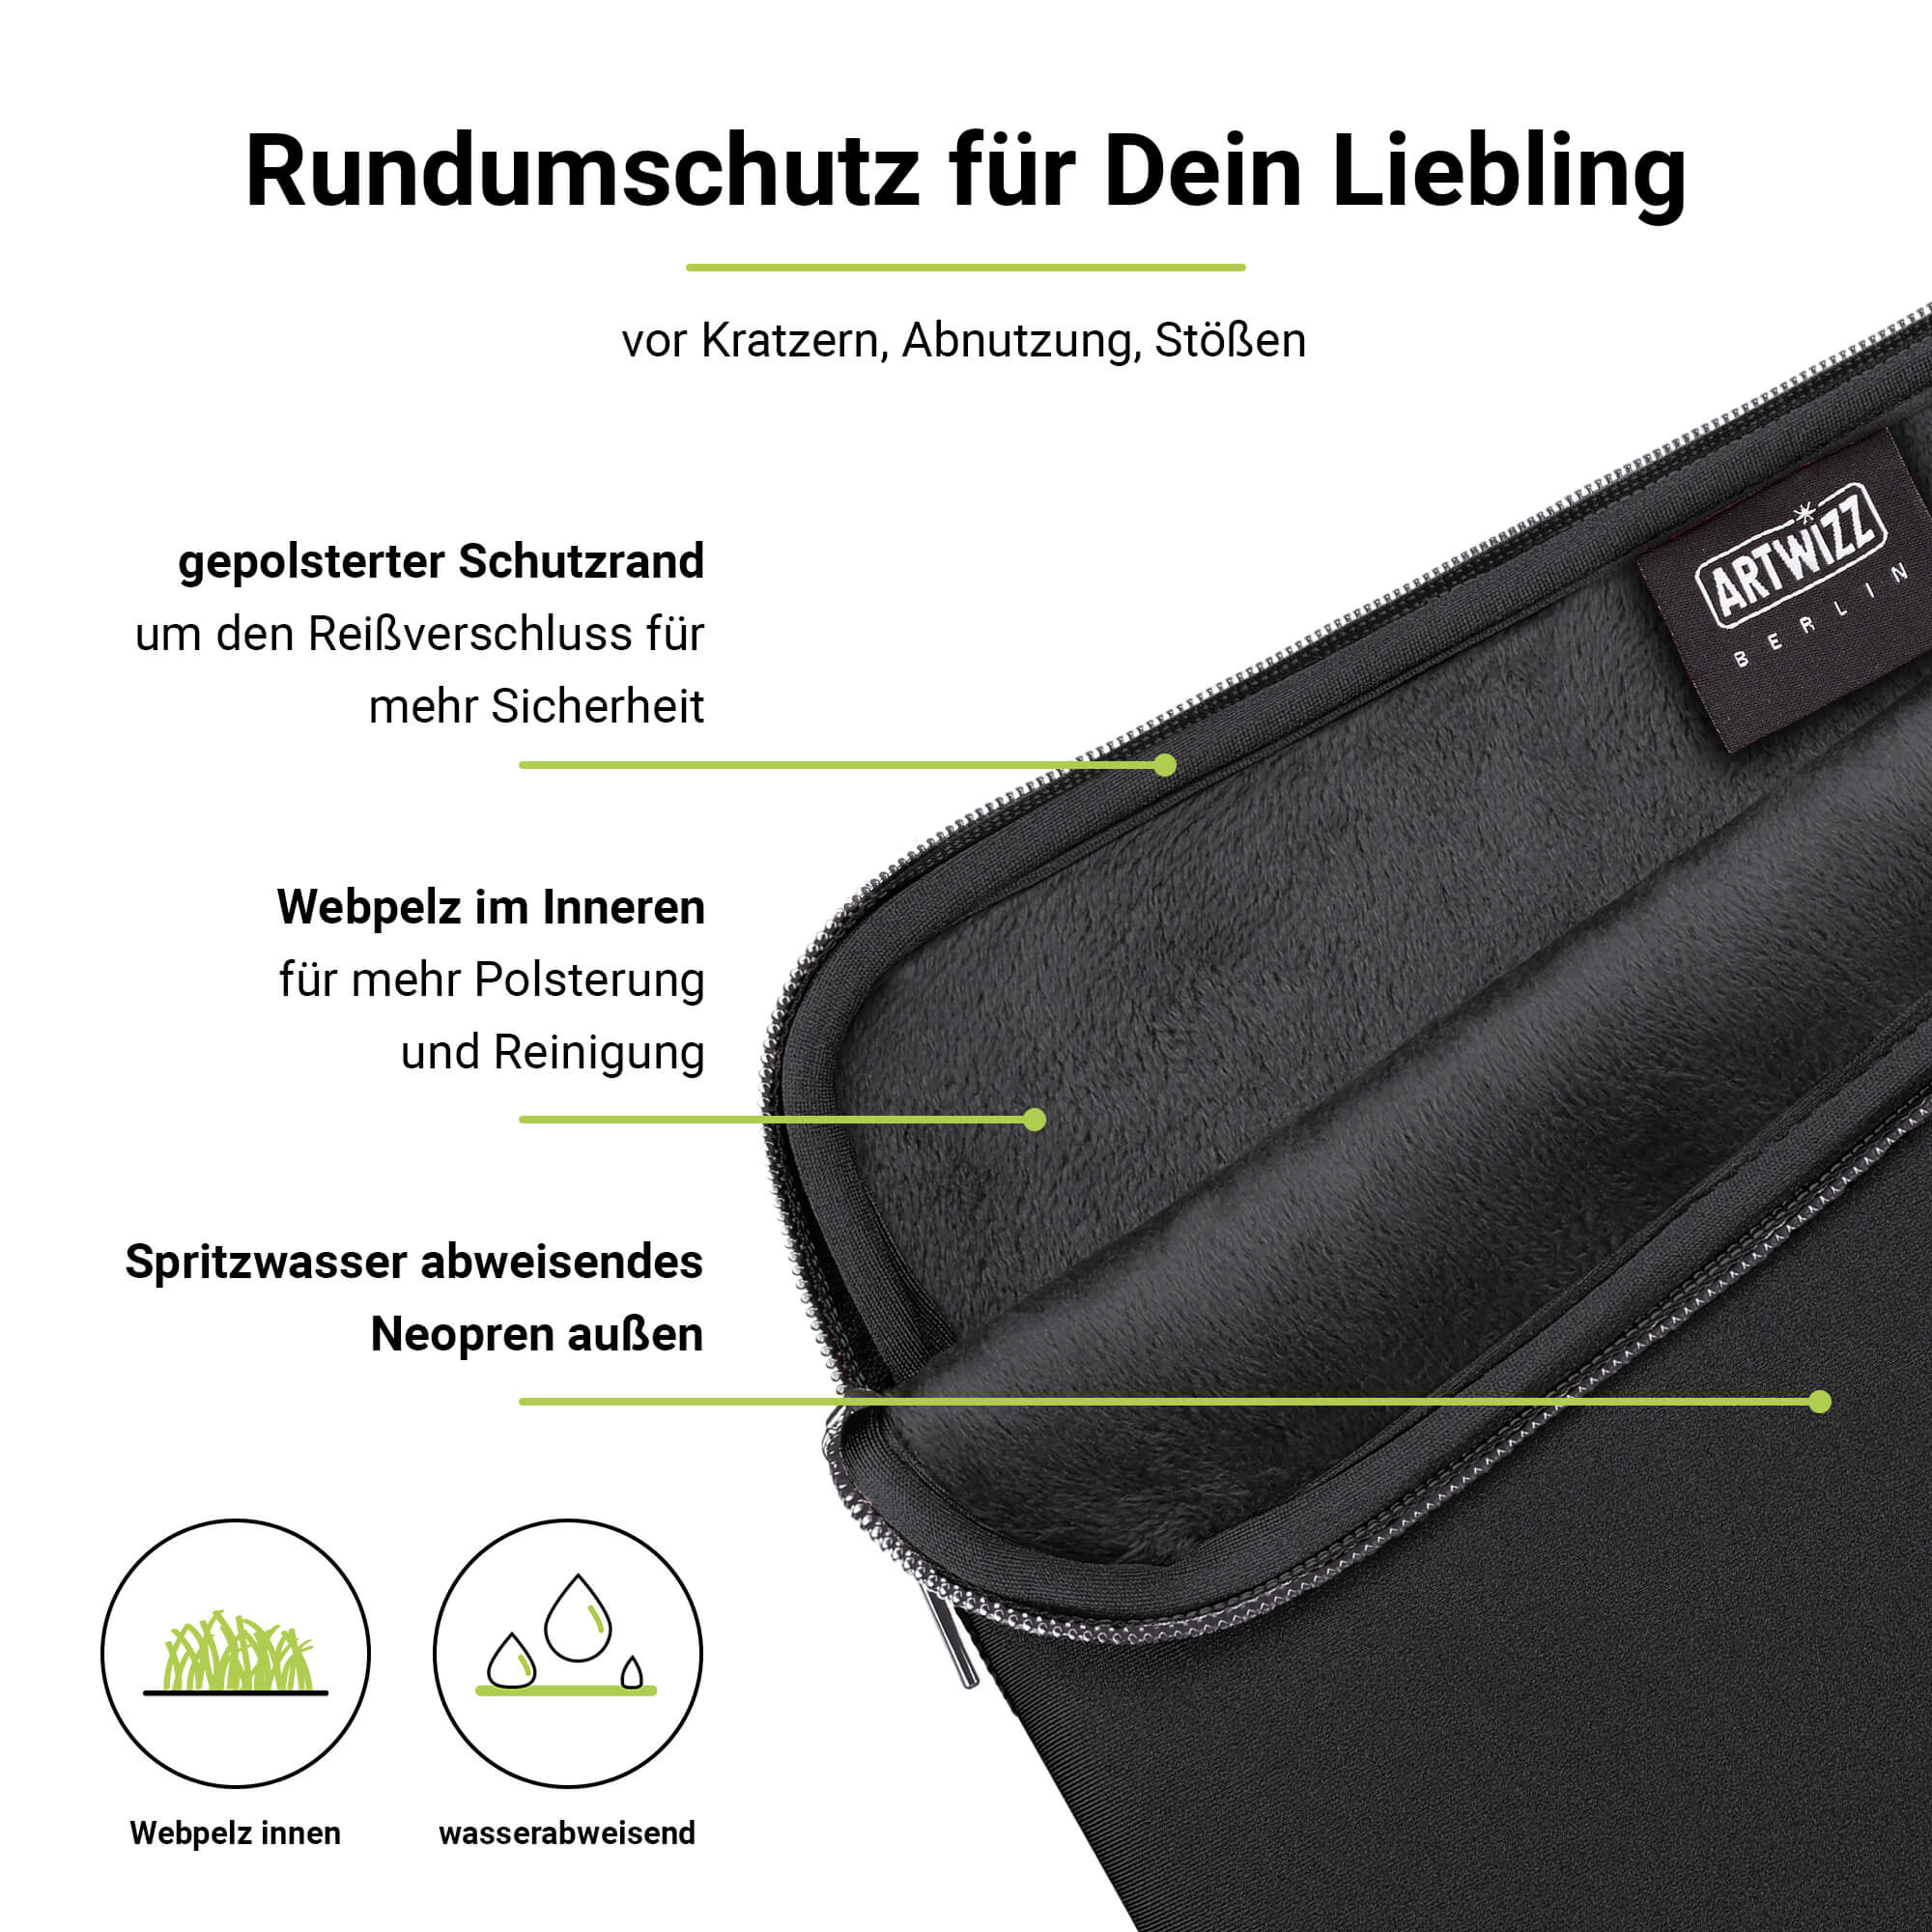 ARTWIZZ Neoprene Schwarz Apple für Sleeve Tasche Sleeve Neopren, Notebook